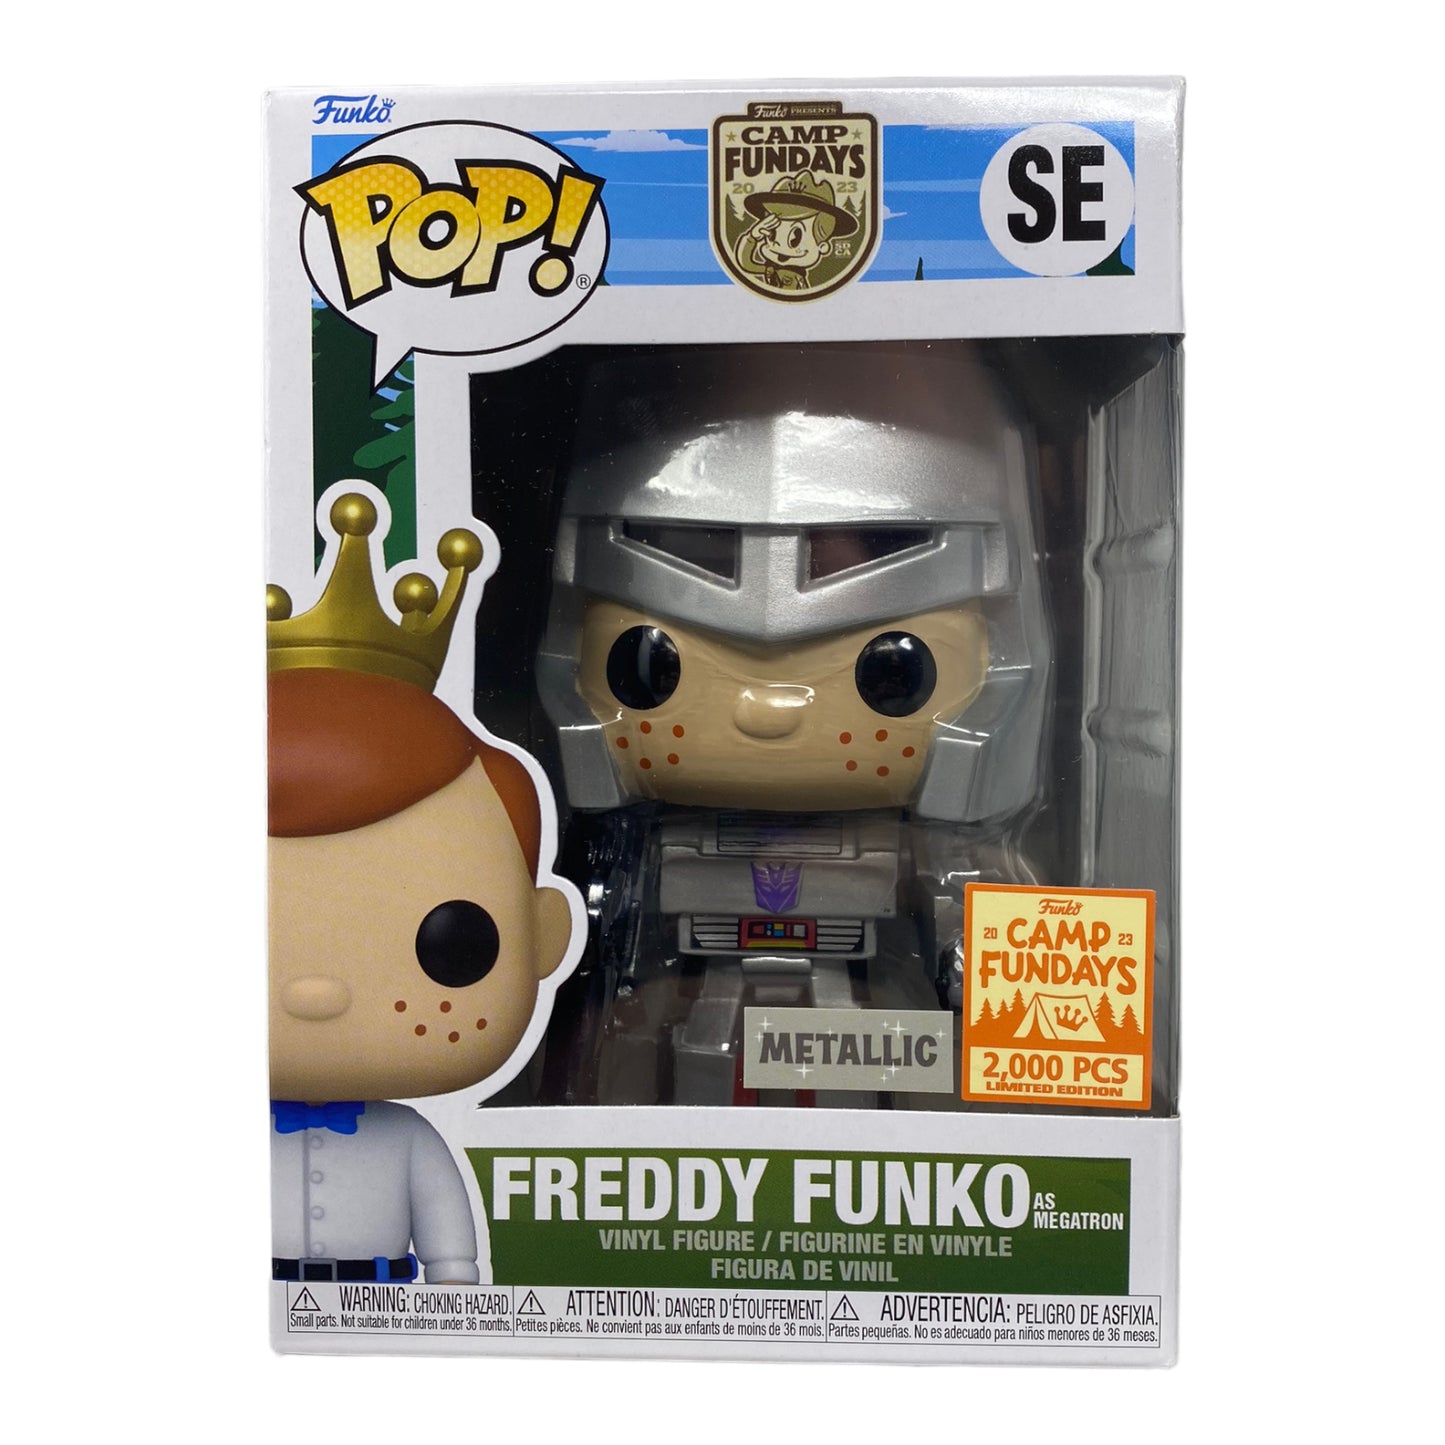 SOLD - 2023 Freddy Funko as Megatron SE, Metallic, Camp Fundays